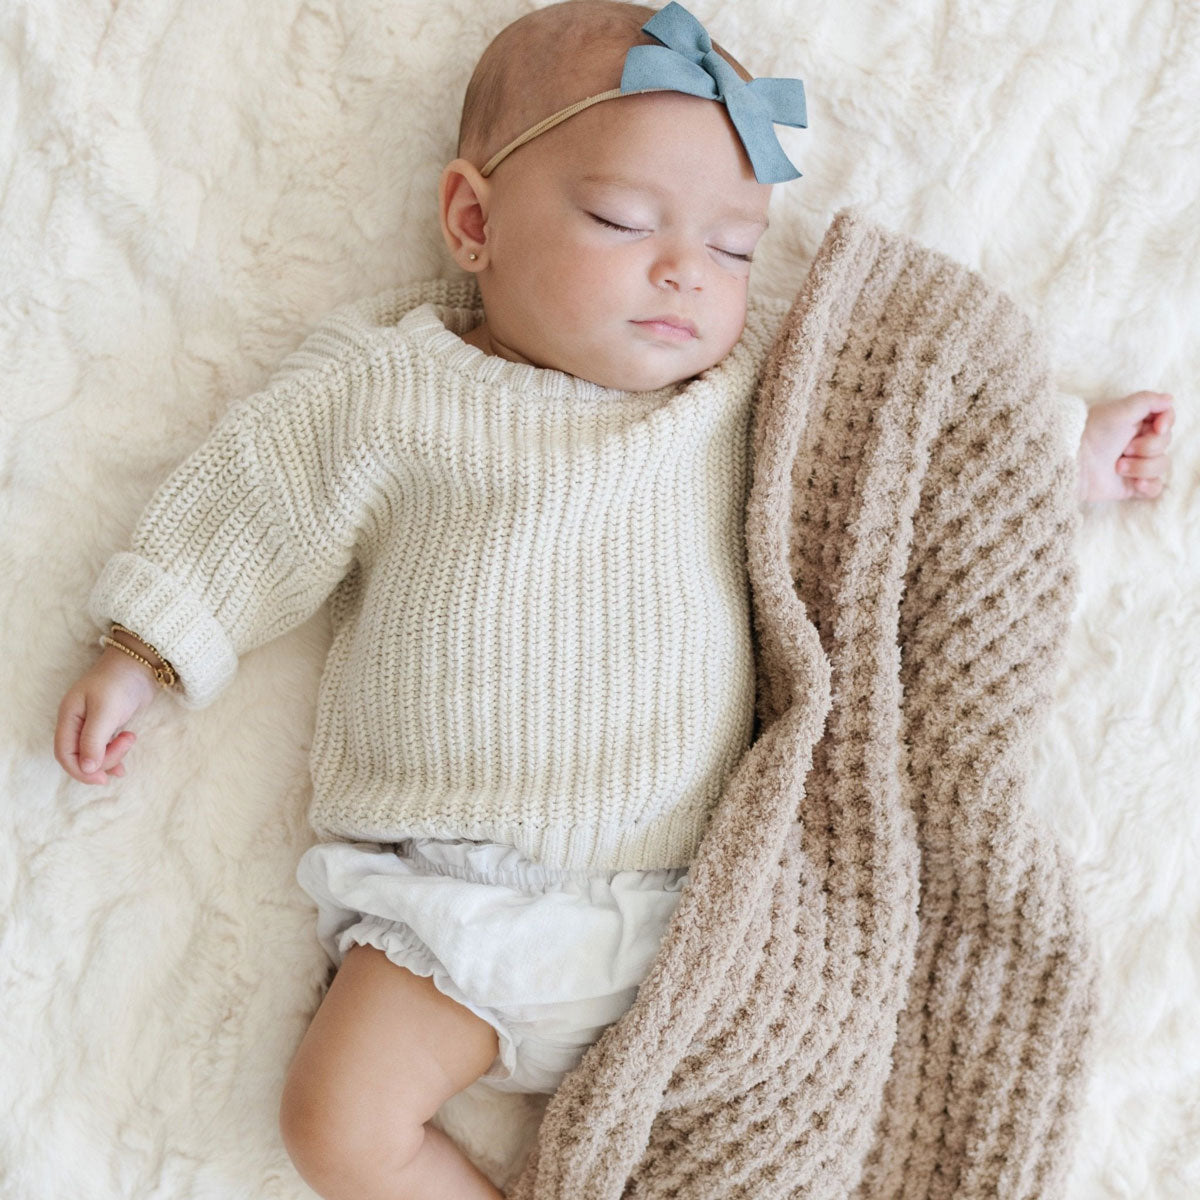 Baby girl sleeps with Saranoni Receiving Waffle Knit Blanket - Wheat